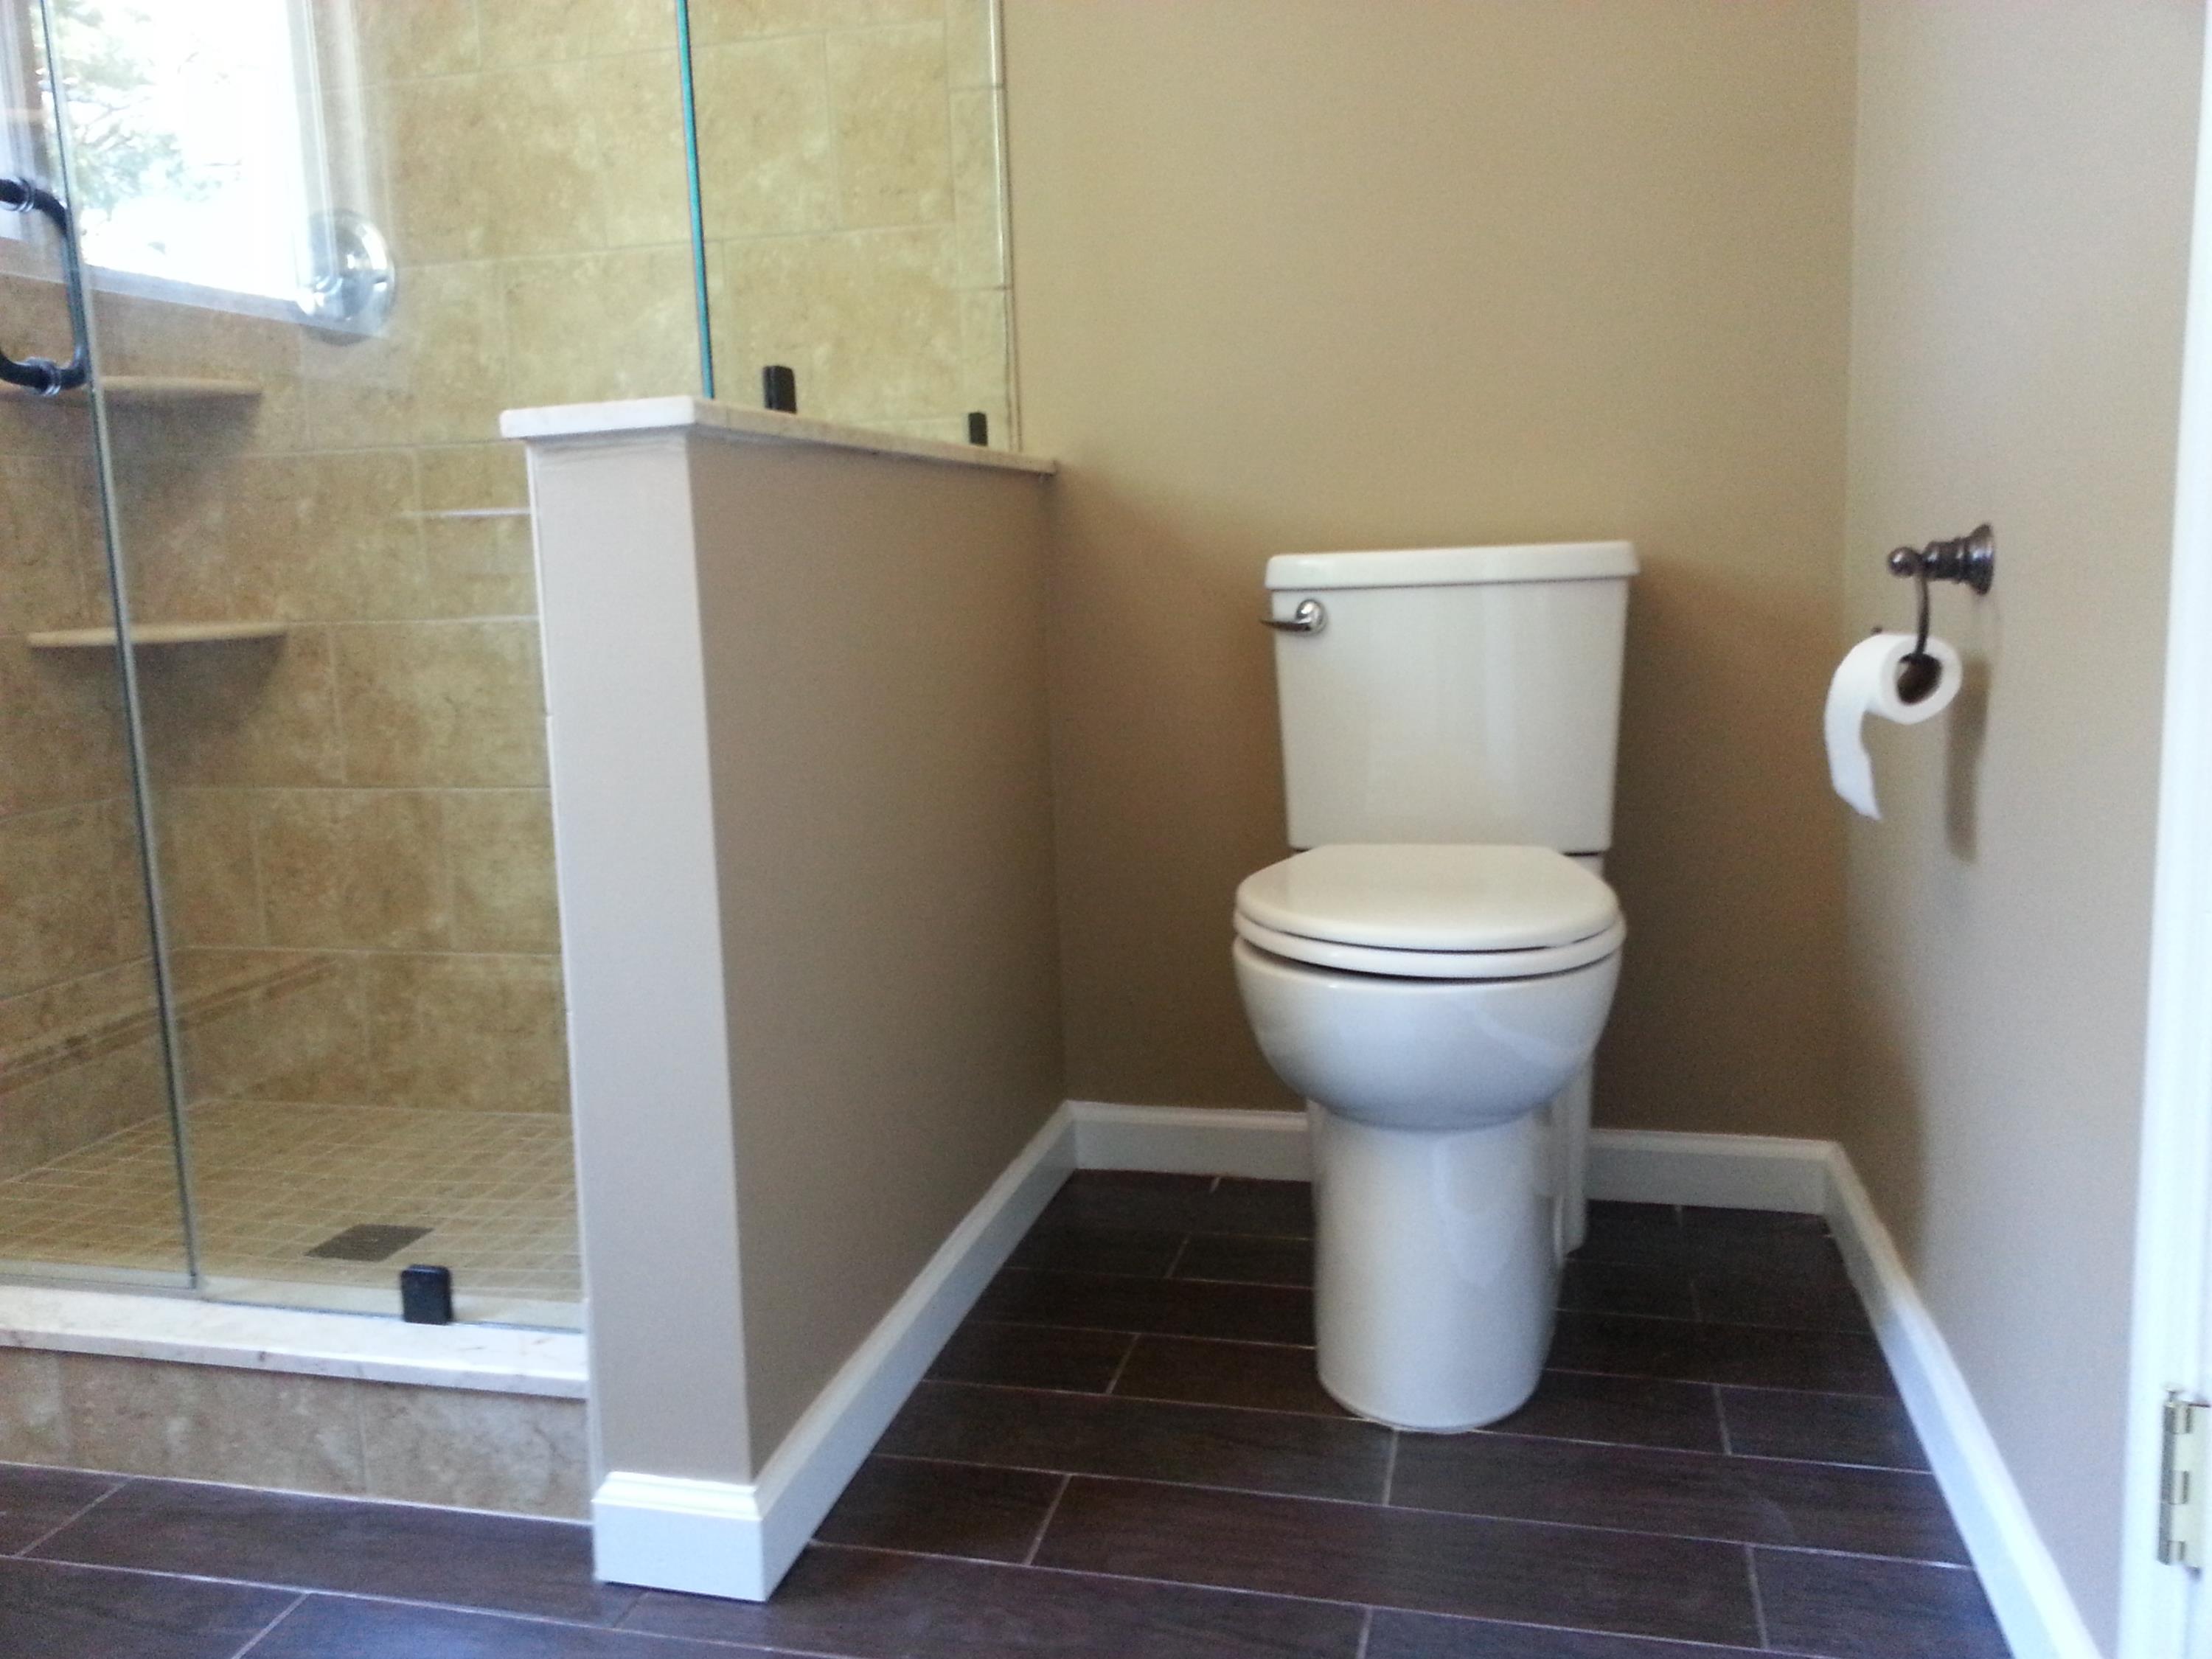 toilet plumbing and installation